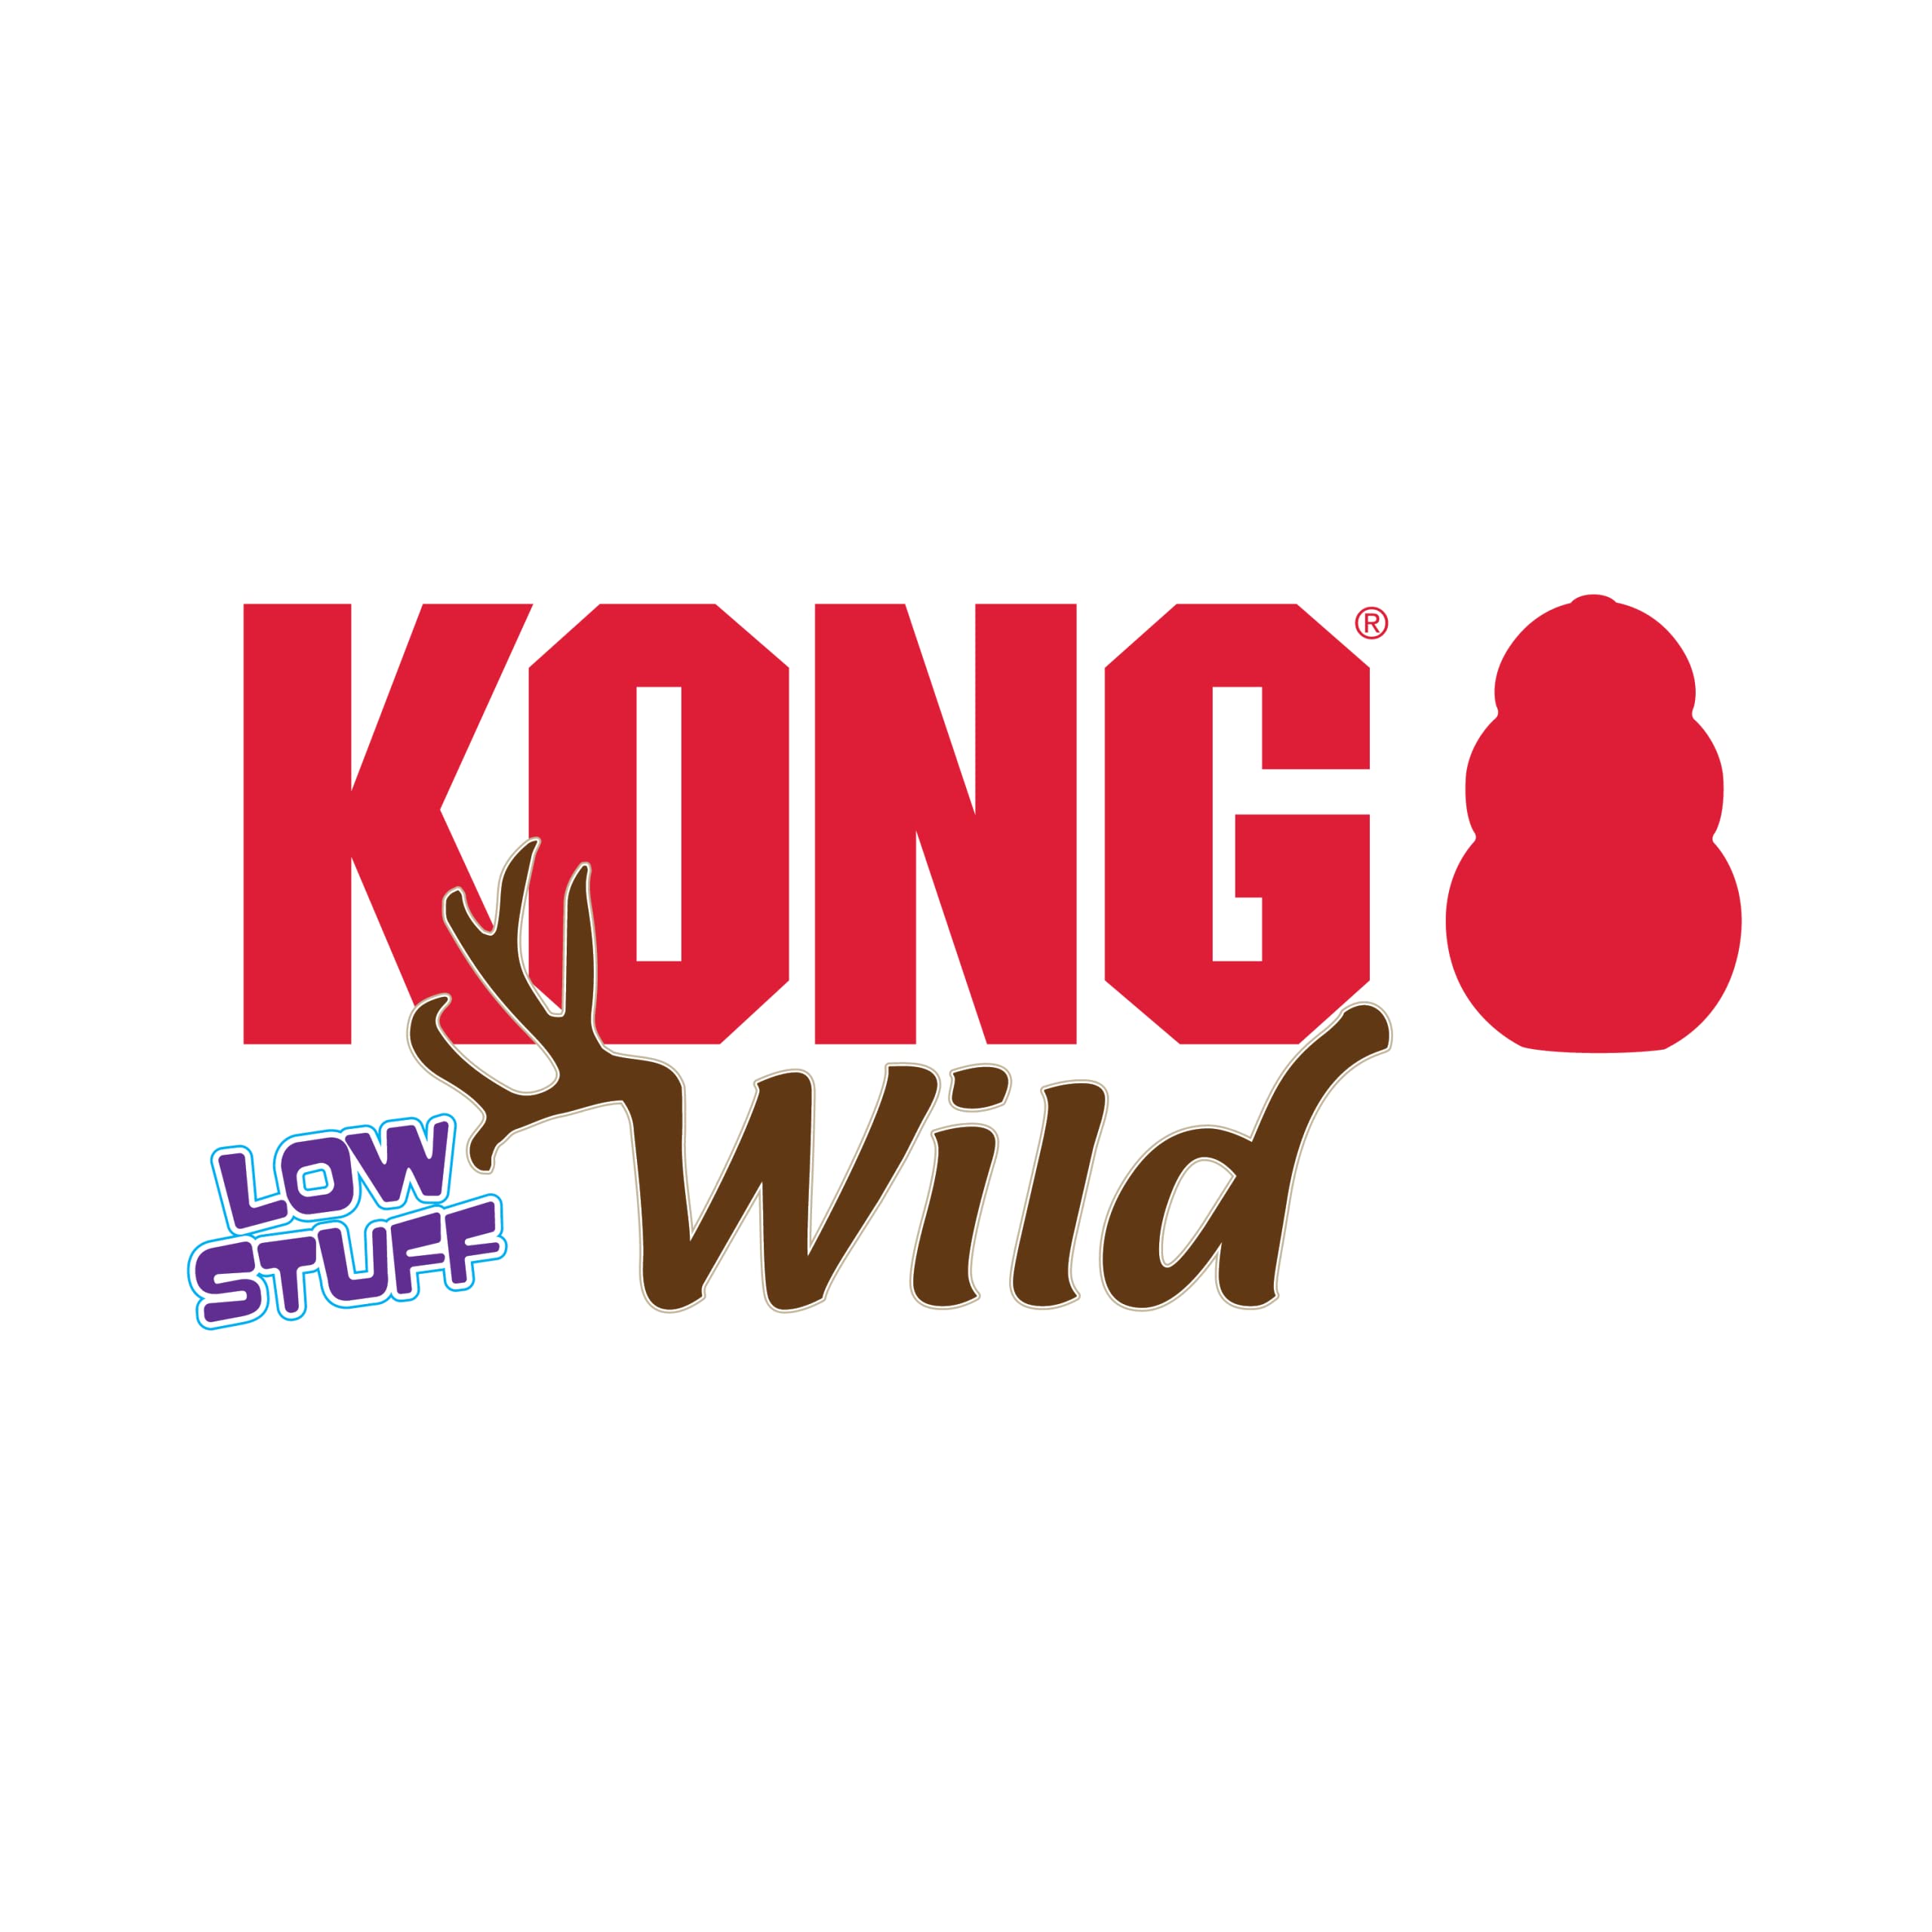 Kong Wild Rabbit Low-Stuffing Squeak and Soft Plush Dog Toy - Medium  